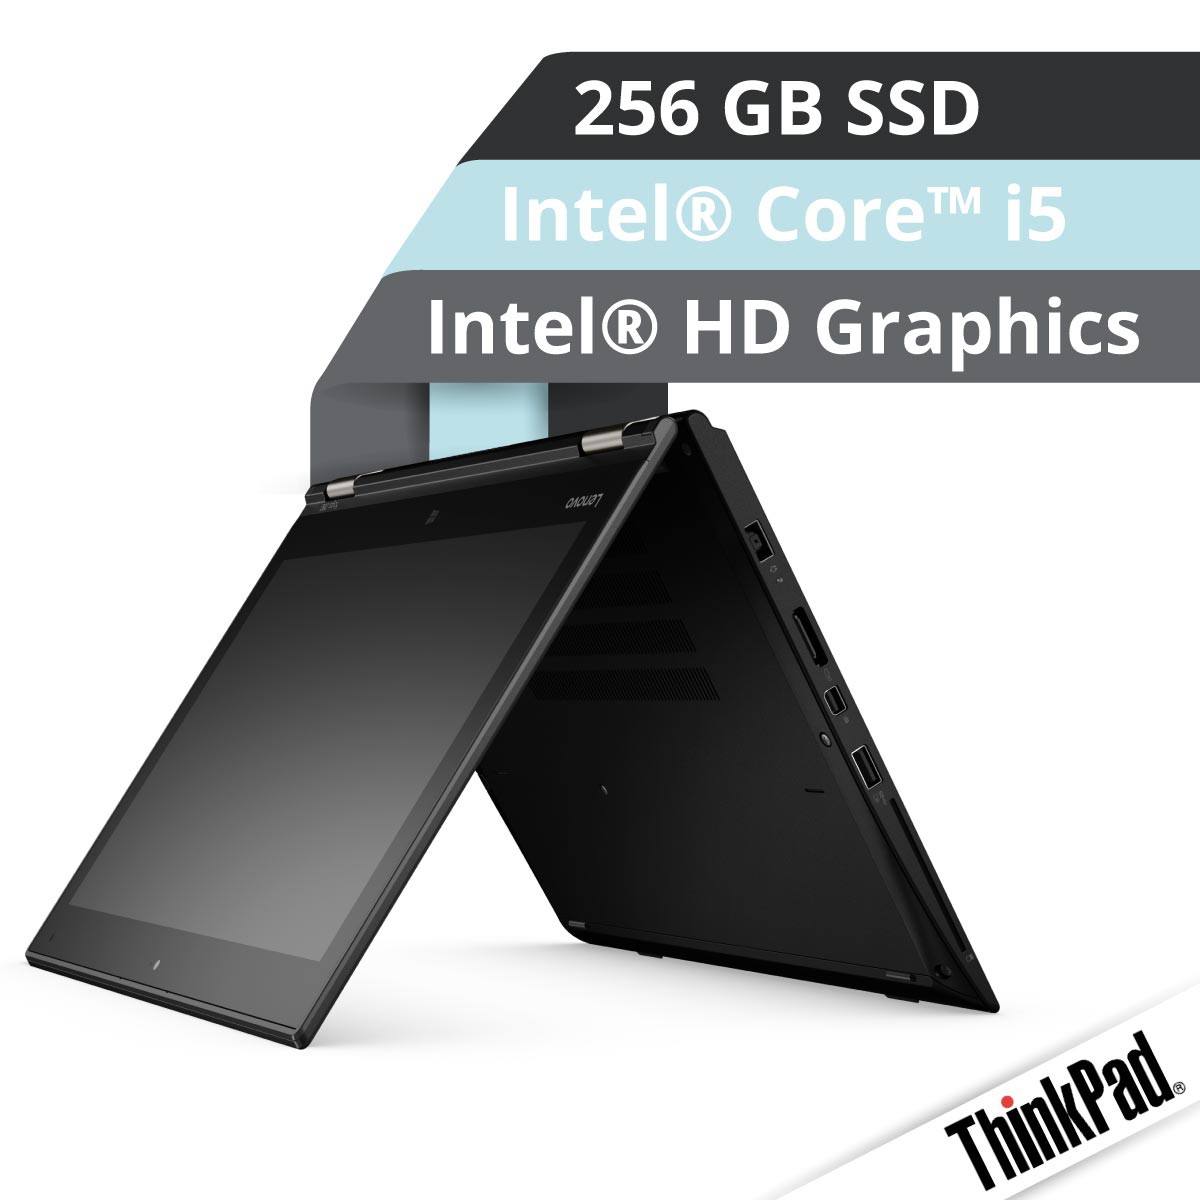 Lenovo™ ThinkPad® Yoga 260 Convertible Notebook Modell 20FD-001X Demoartikel